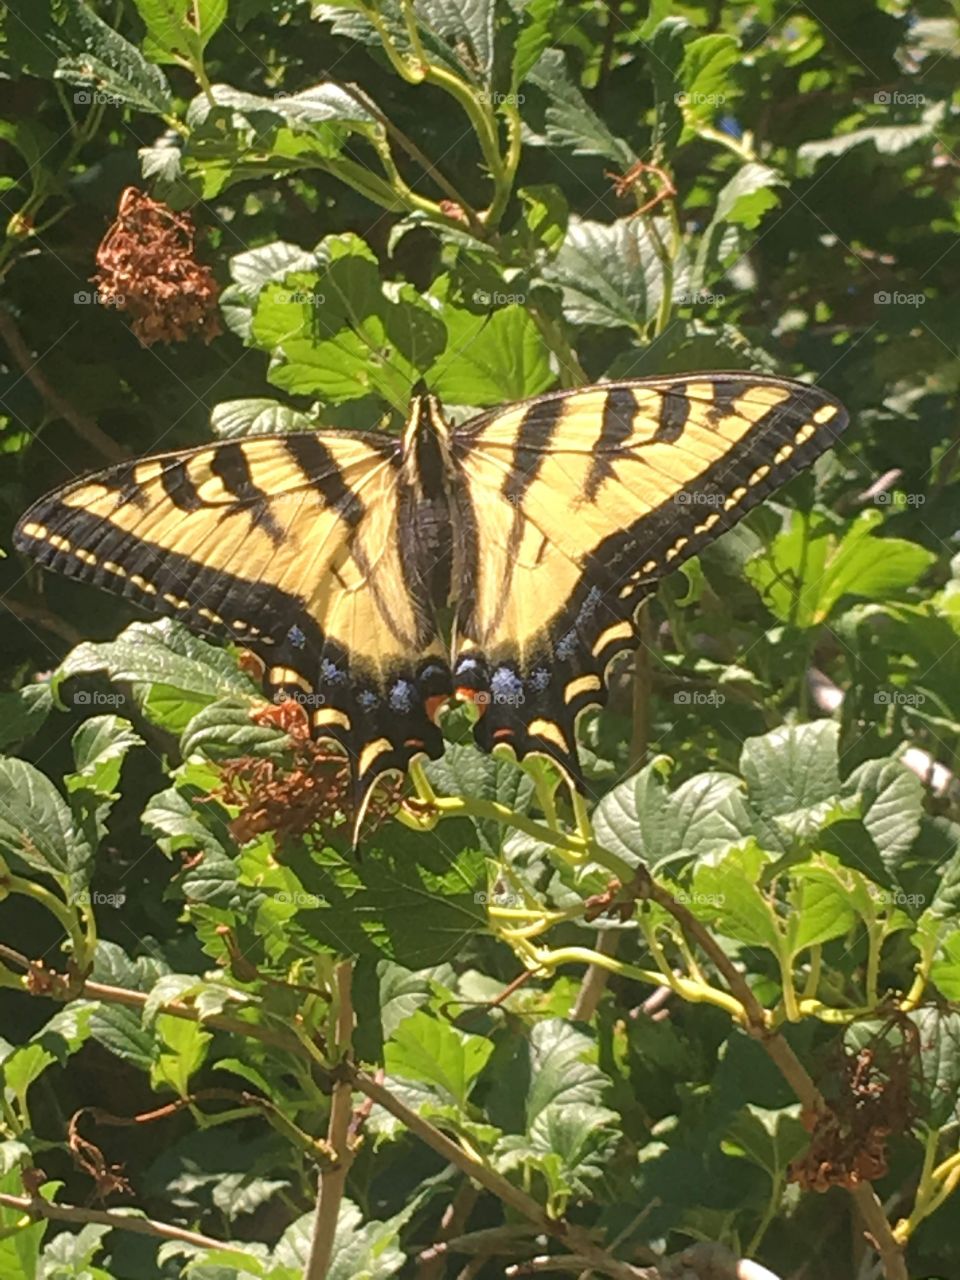 Yellowtail butterfly 